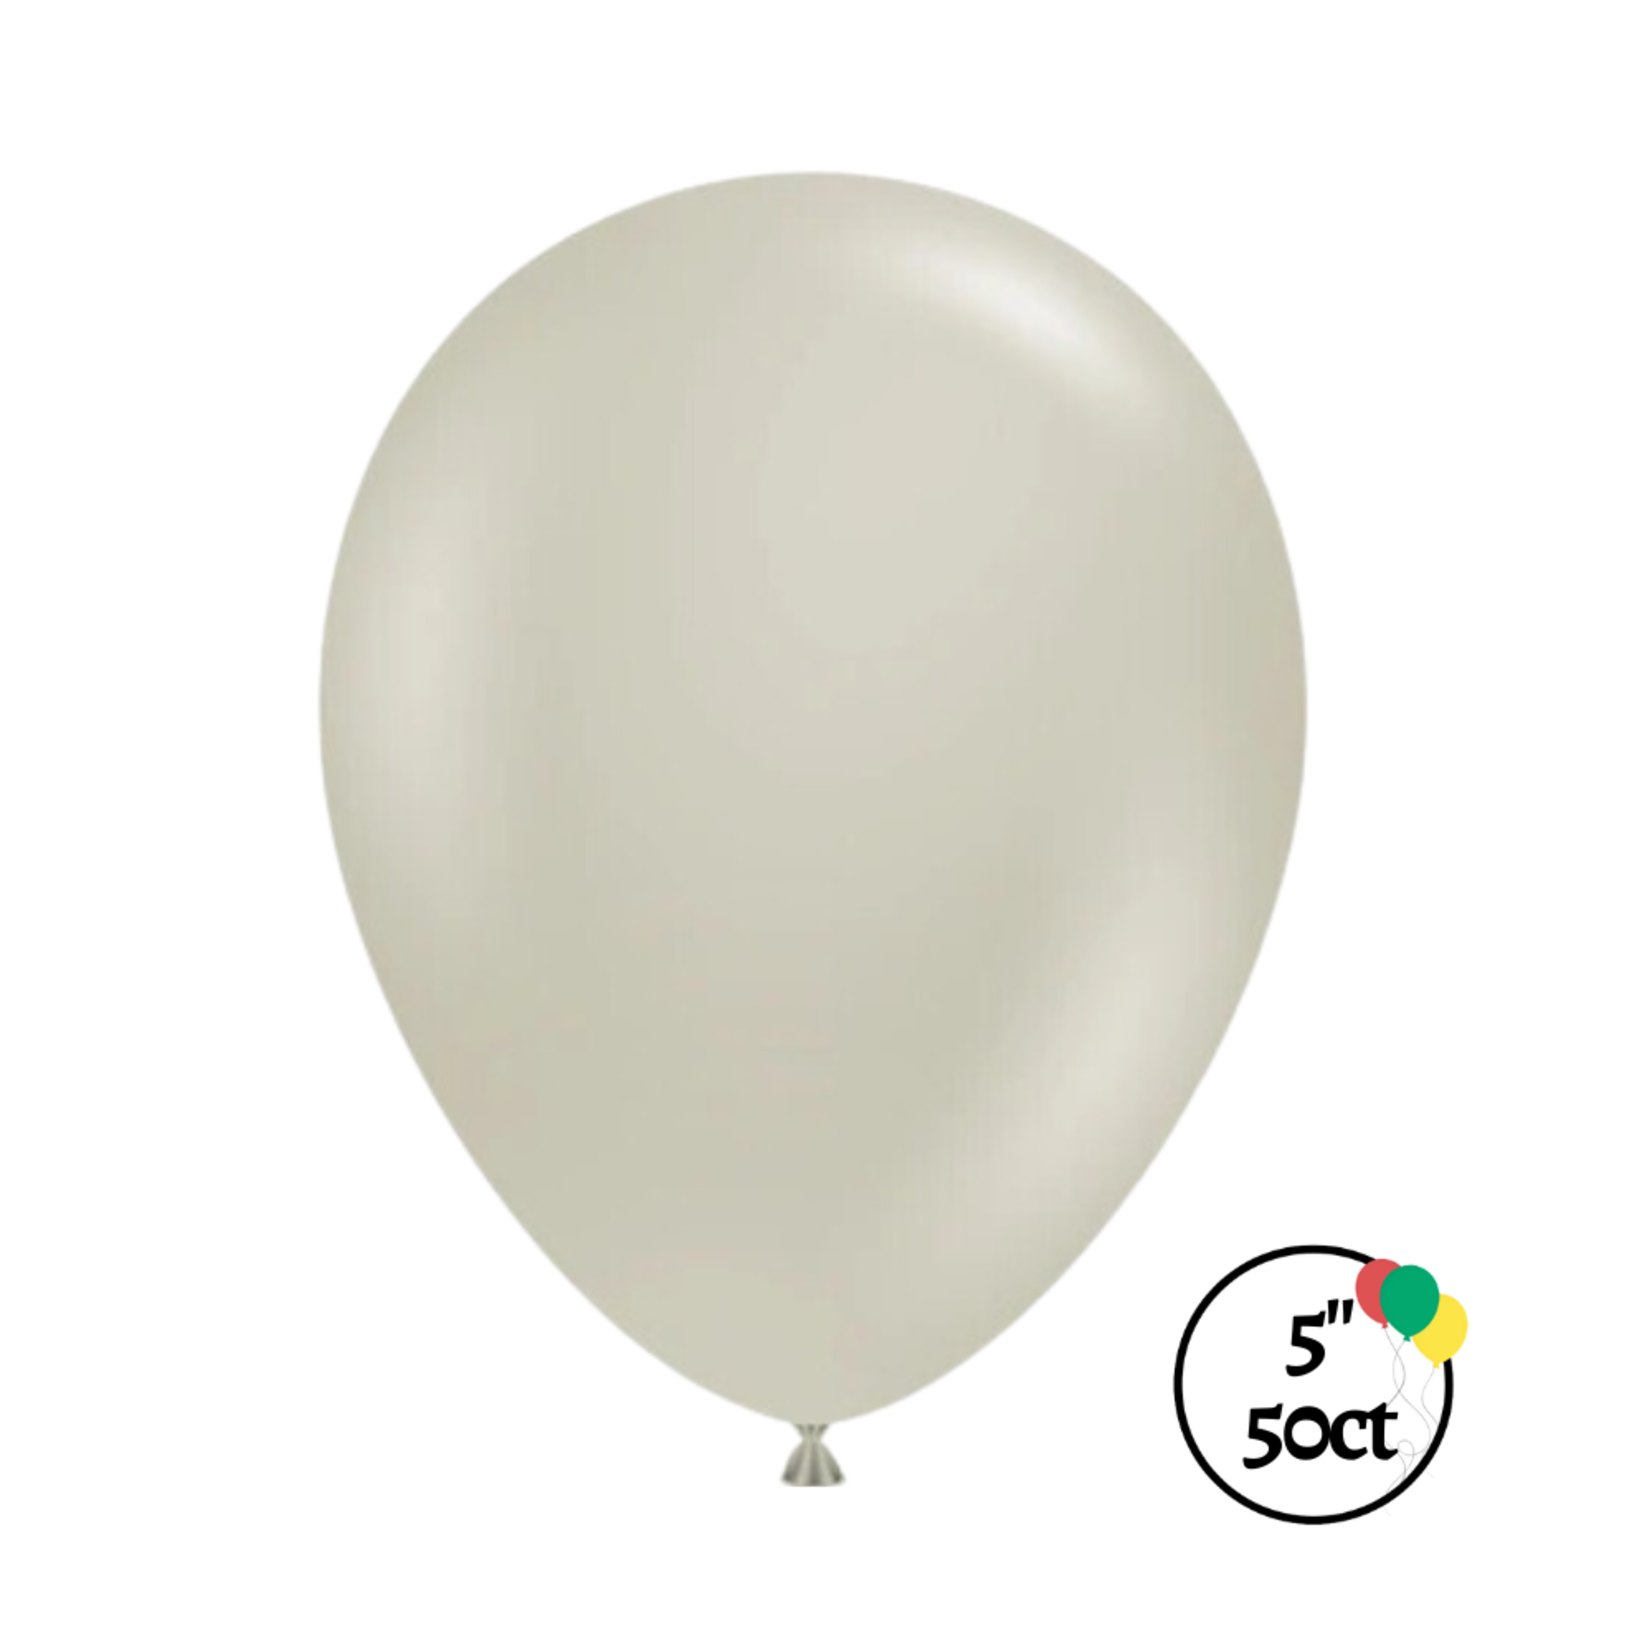 Tuftex 5" Tuftex Stone 50ct Balloon